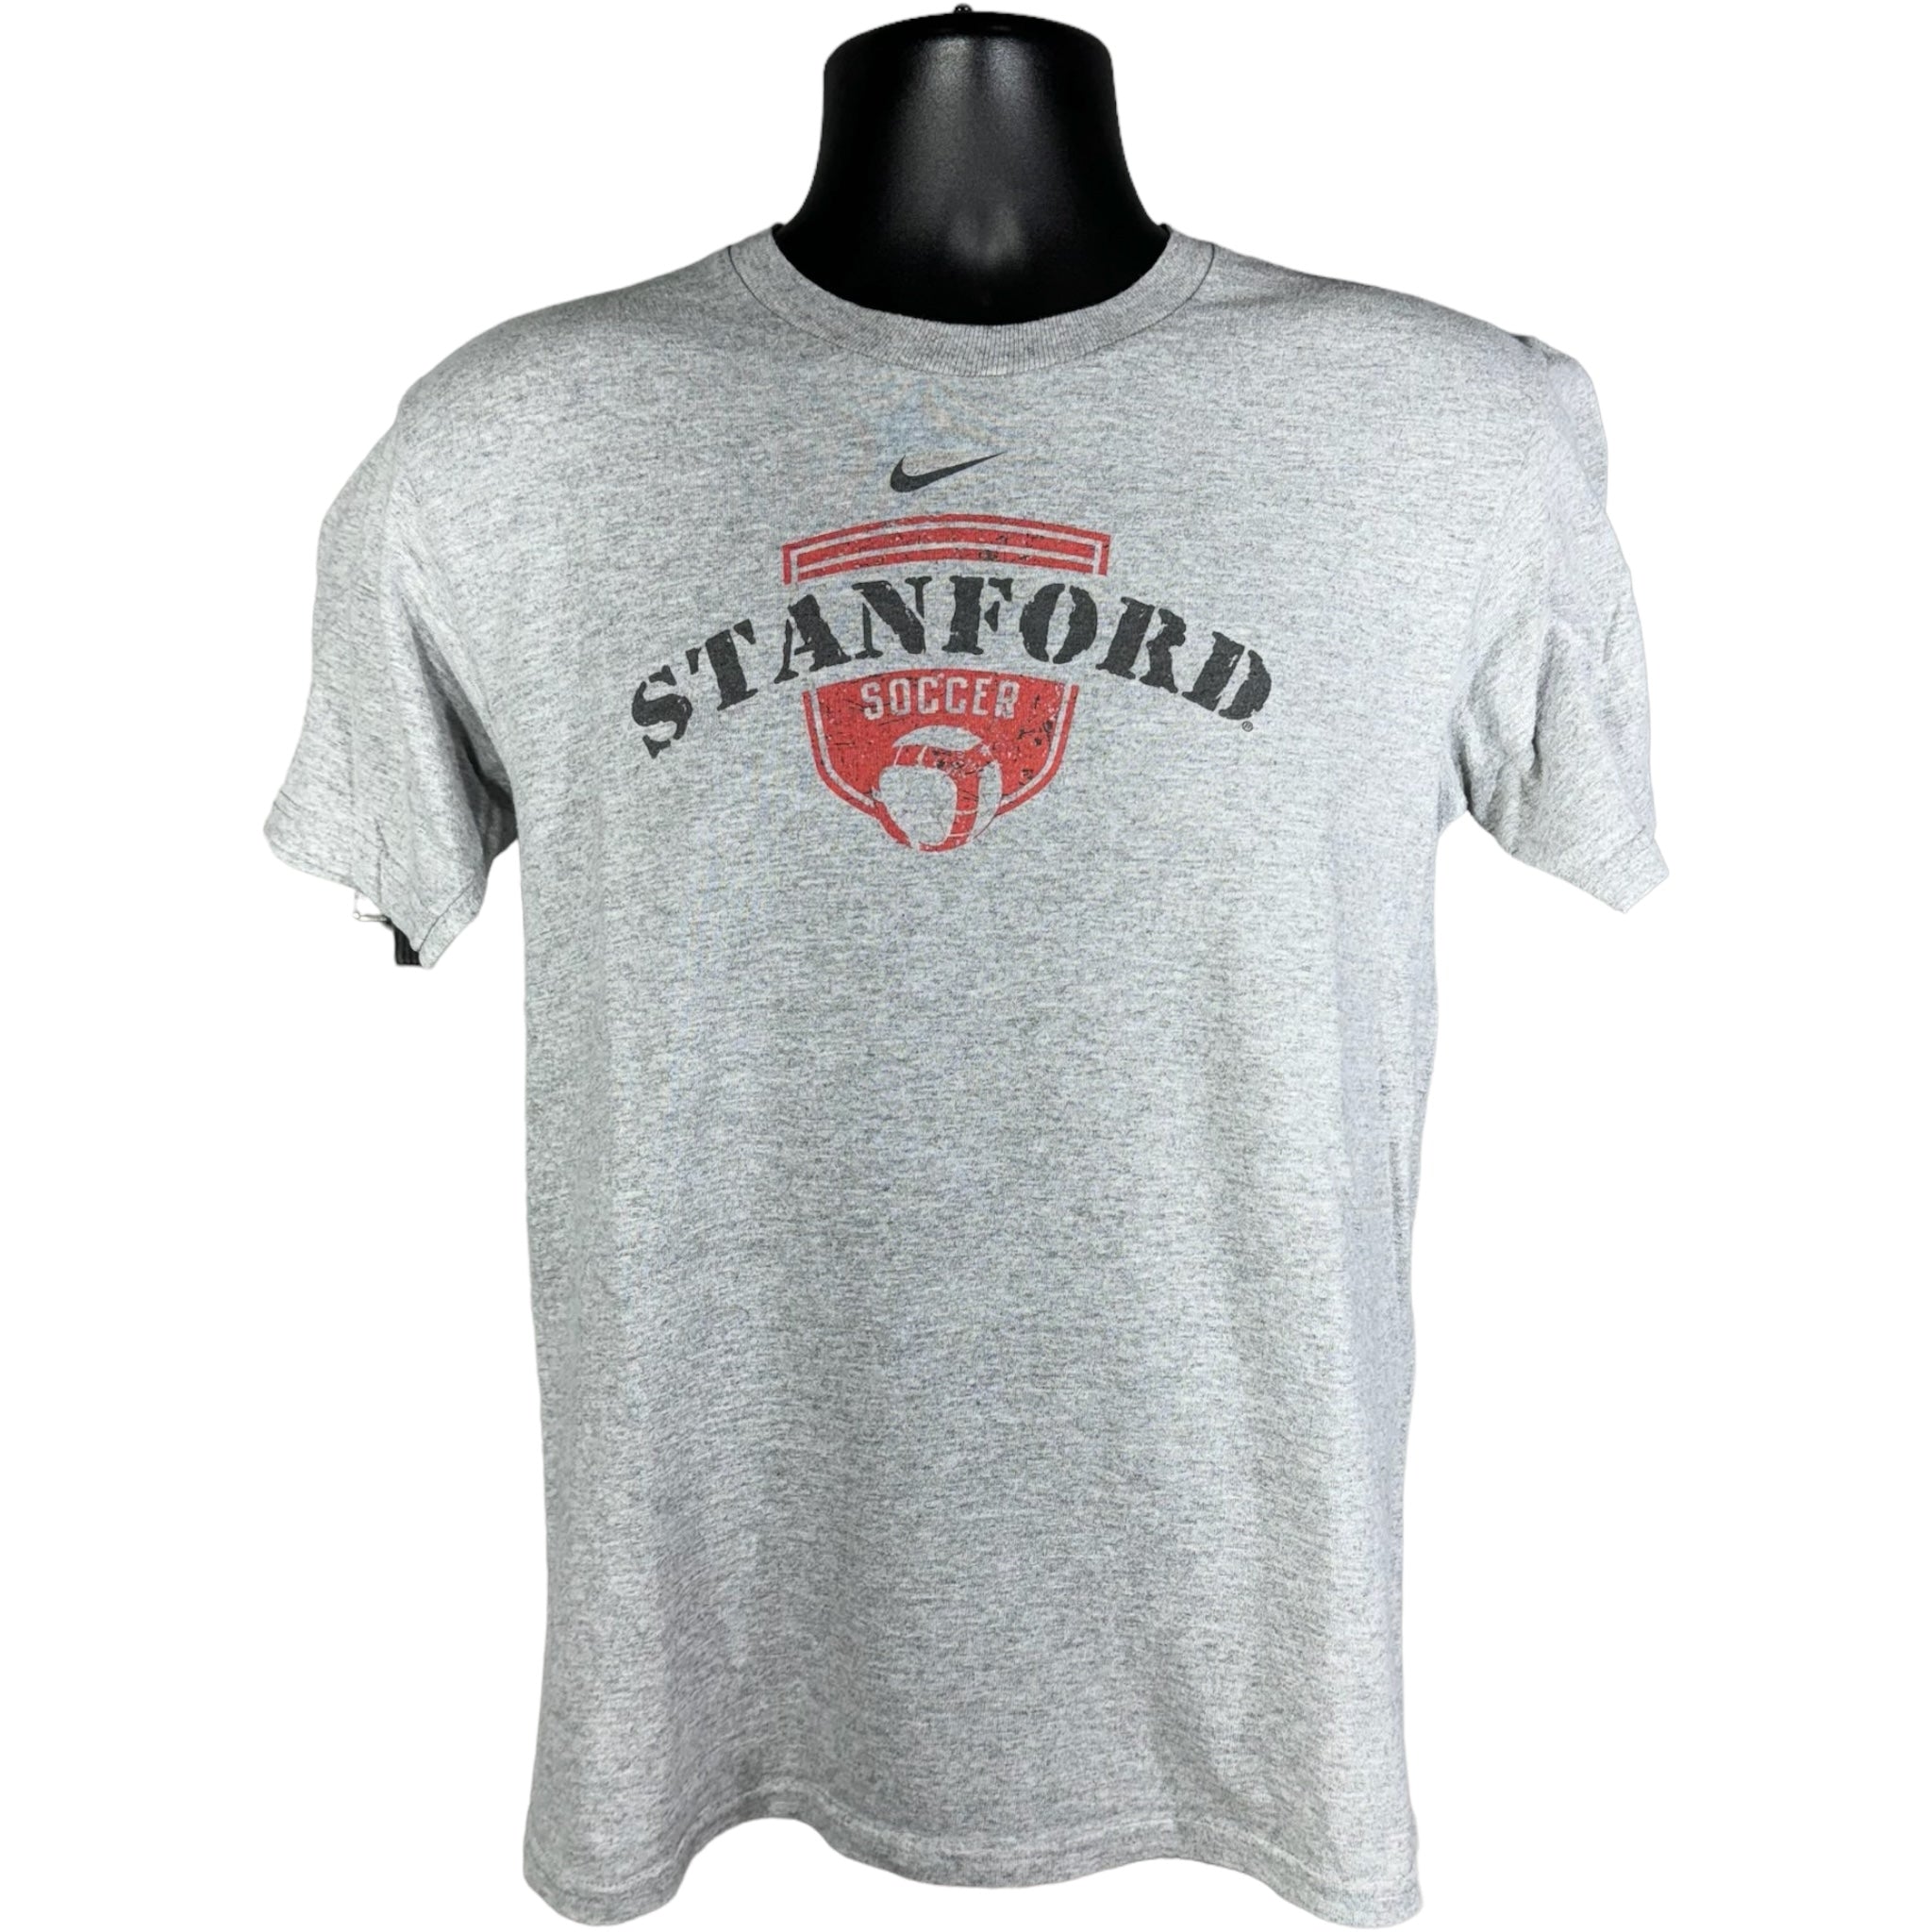 Vintage Nike Stanford University Soccer Tee